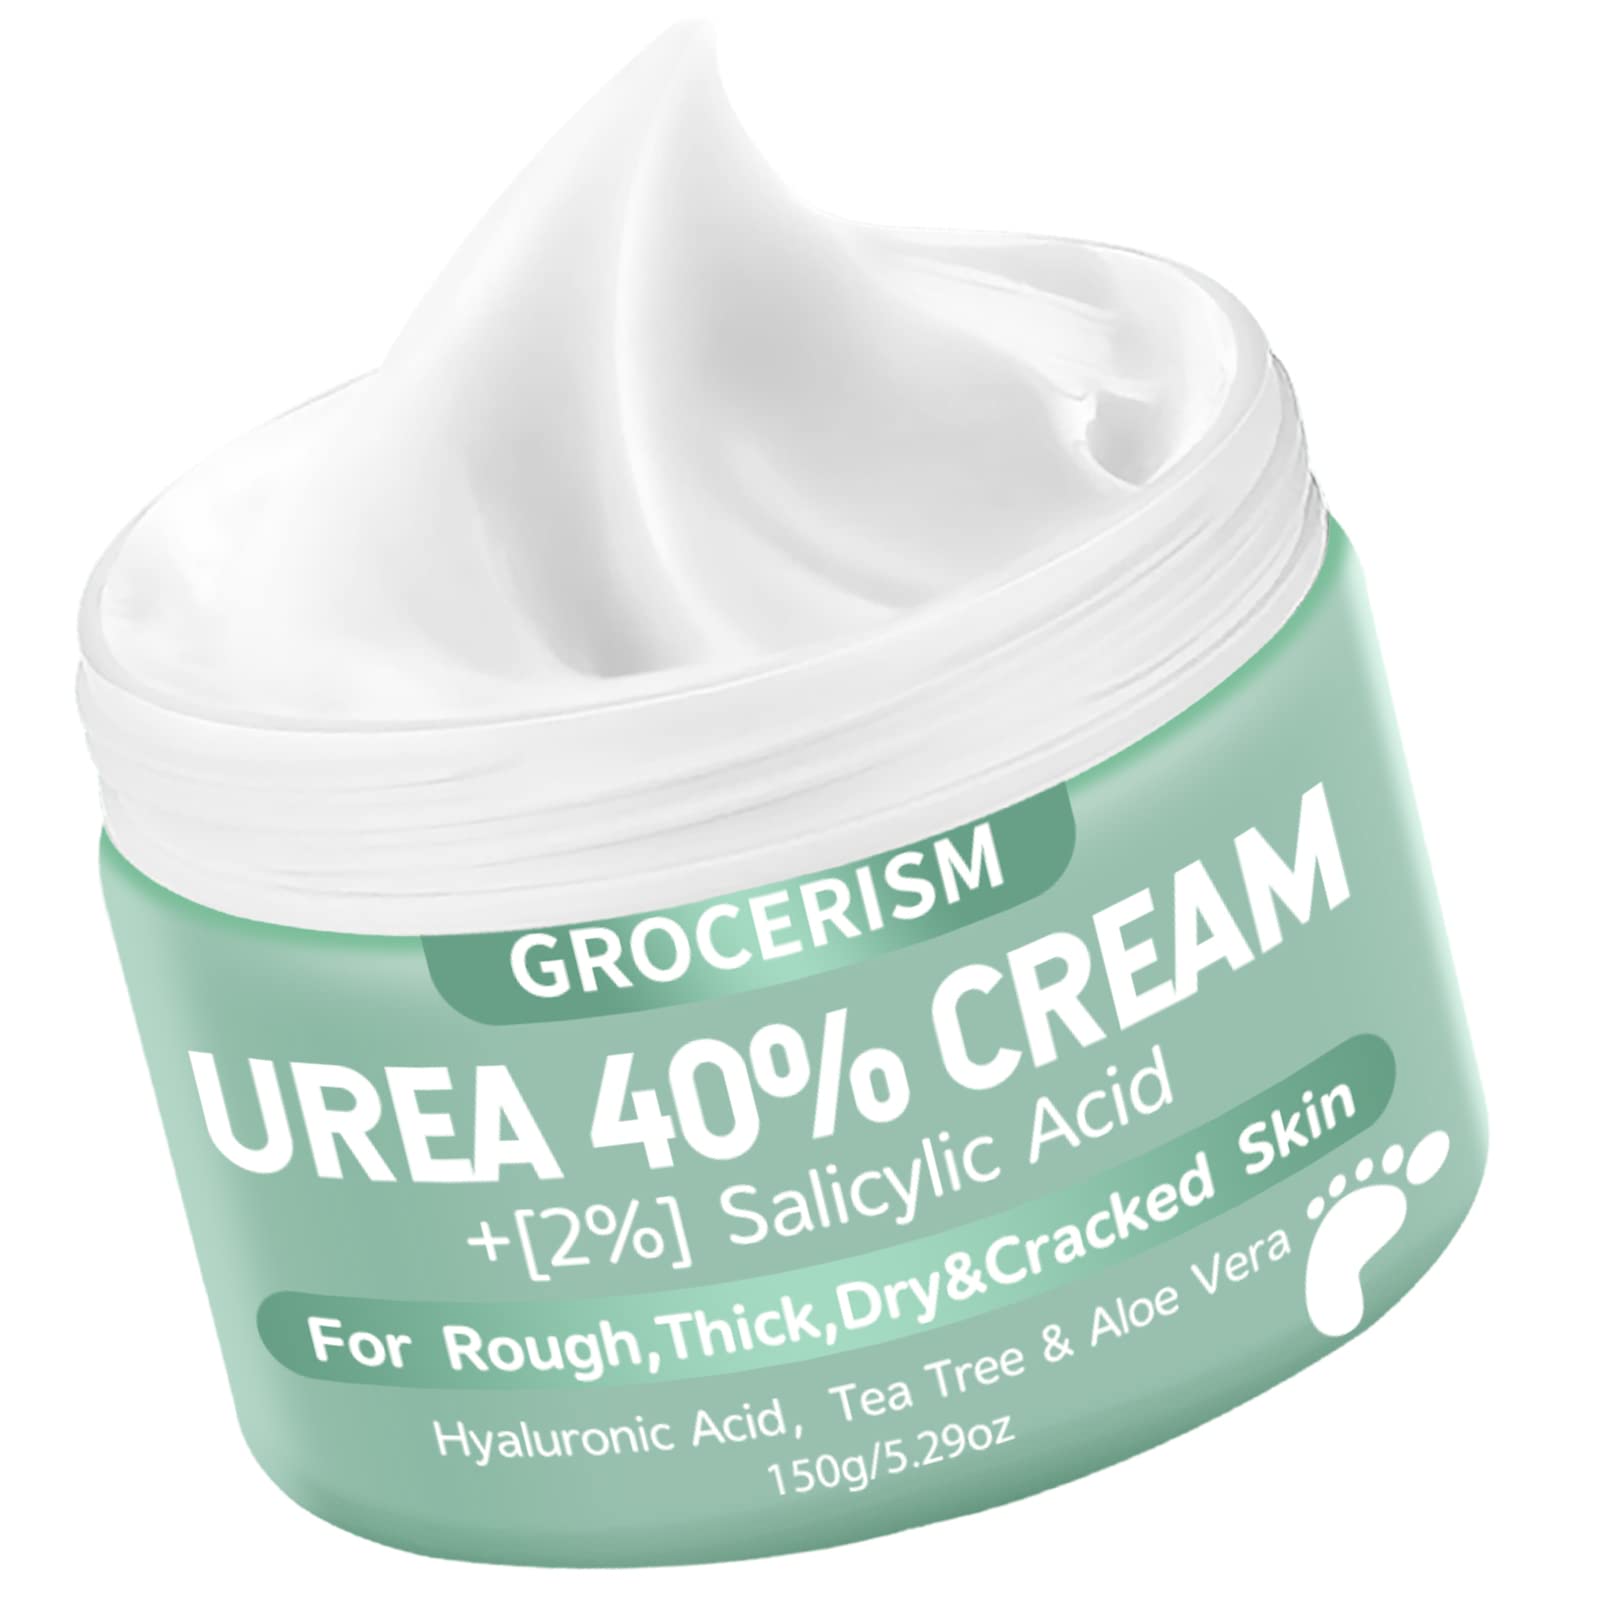 grocerism Urea cream 40 Percent For Feet Plus 2% Salicylic Acid 529 oz  Foot cream and Hand cream Maximum Strength with Hyaluron